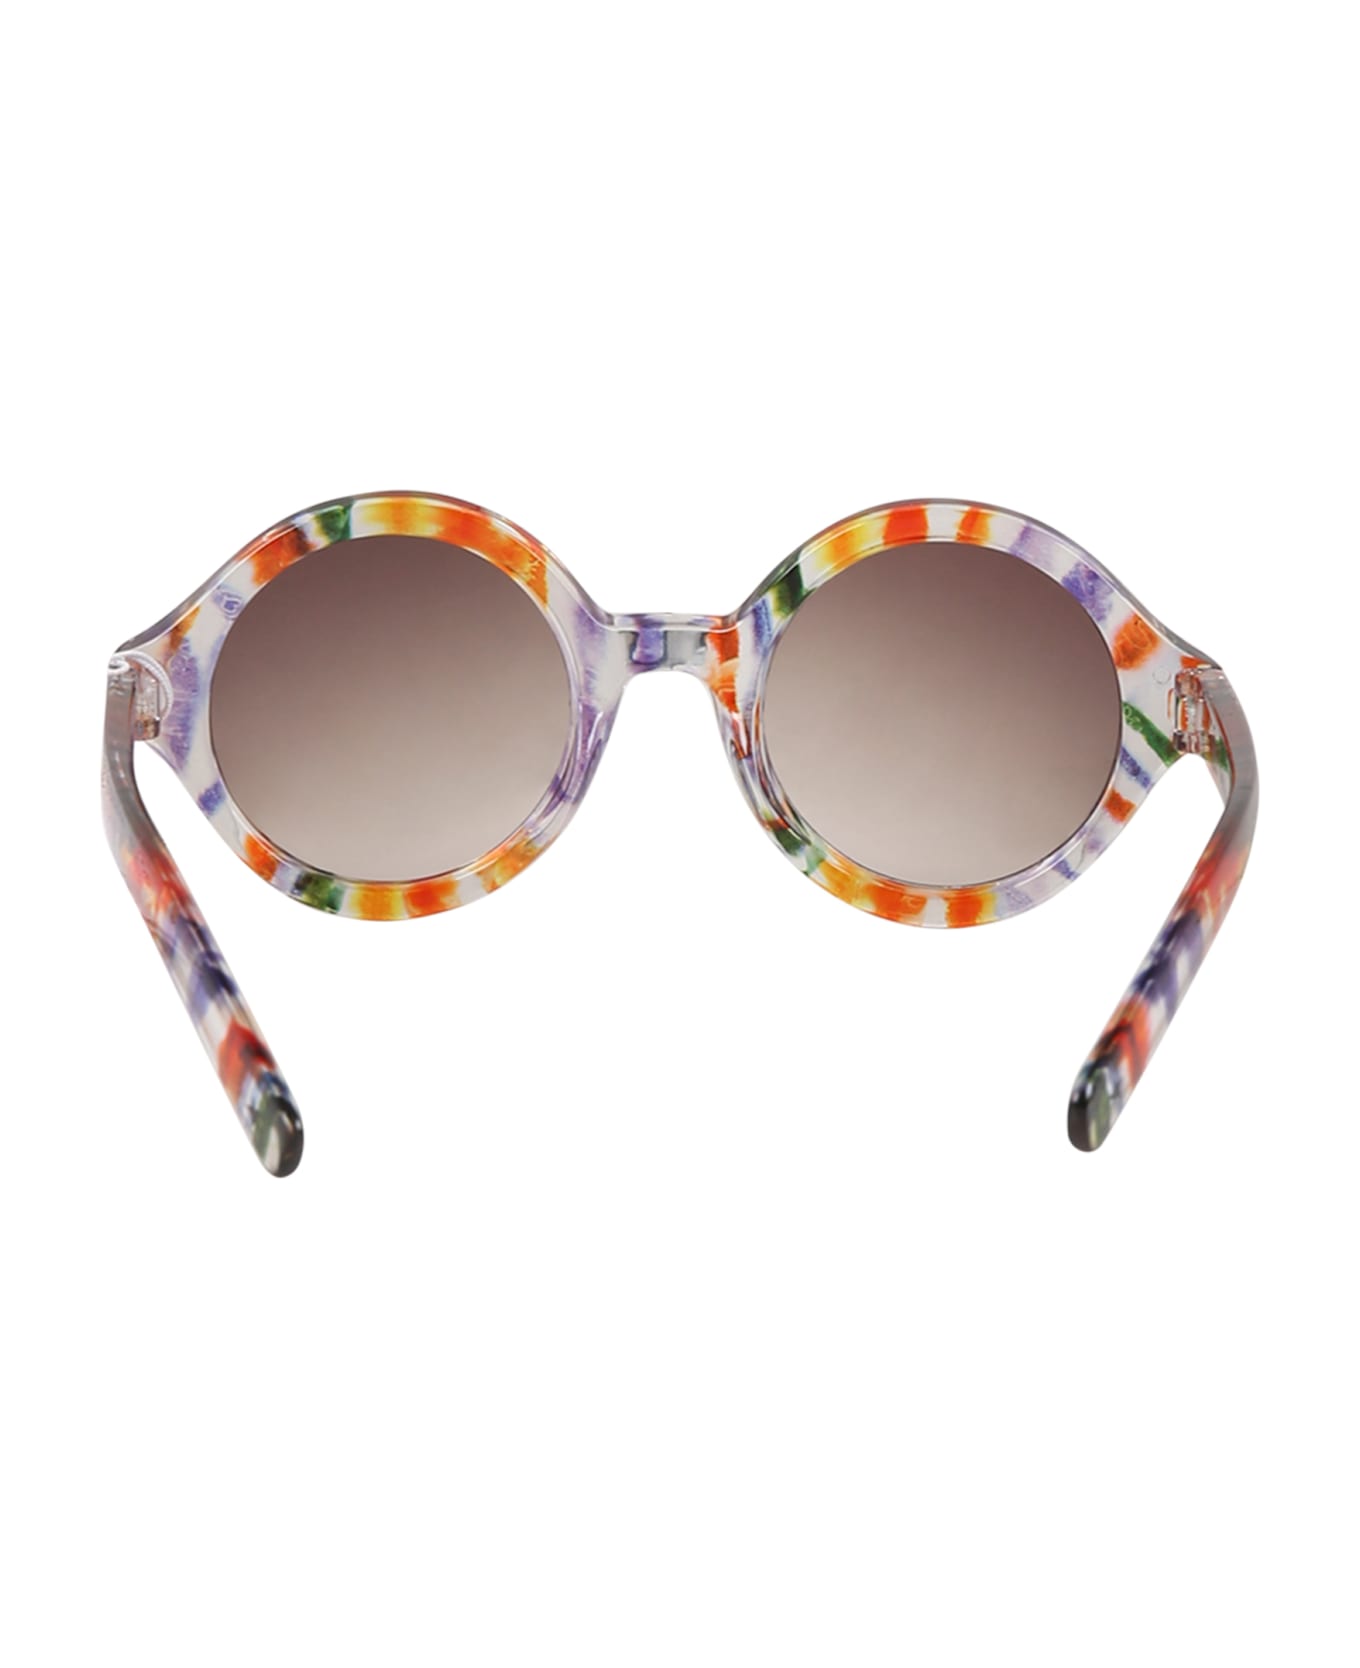 Molo Clear Shelby Sunglasses For Kids - Multicolor